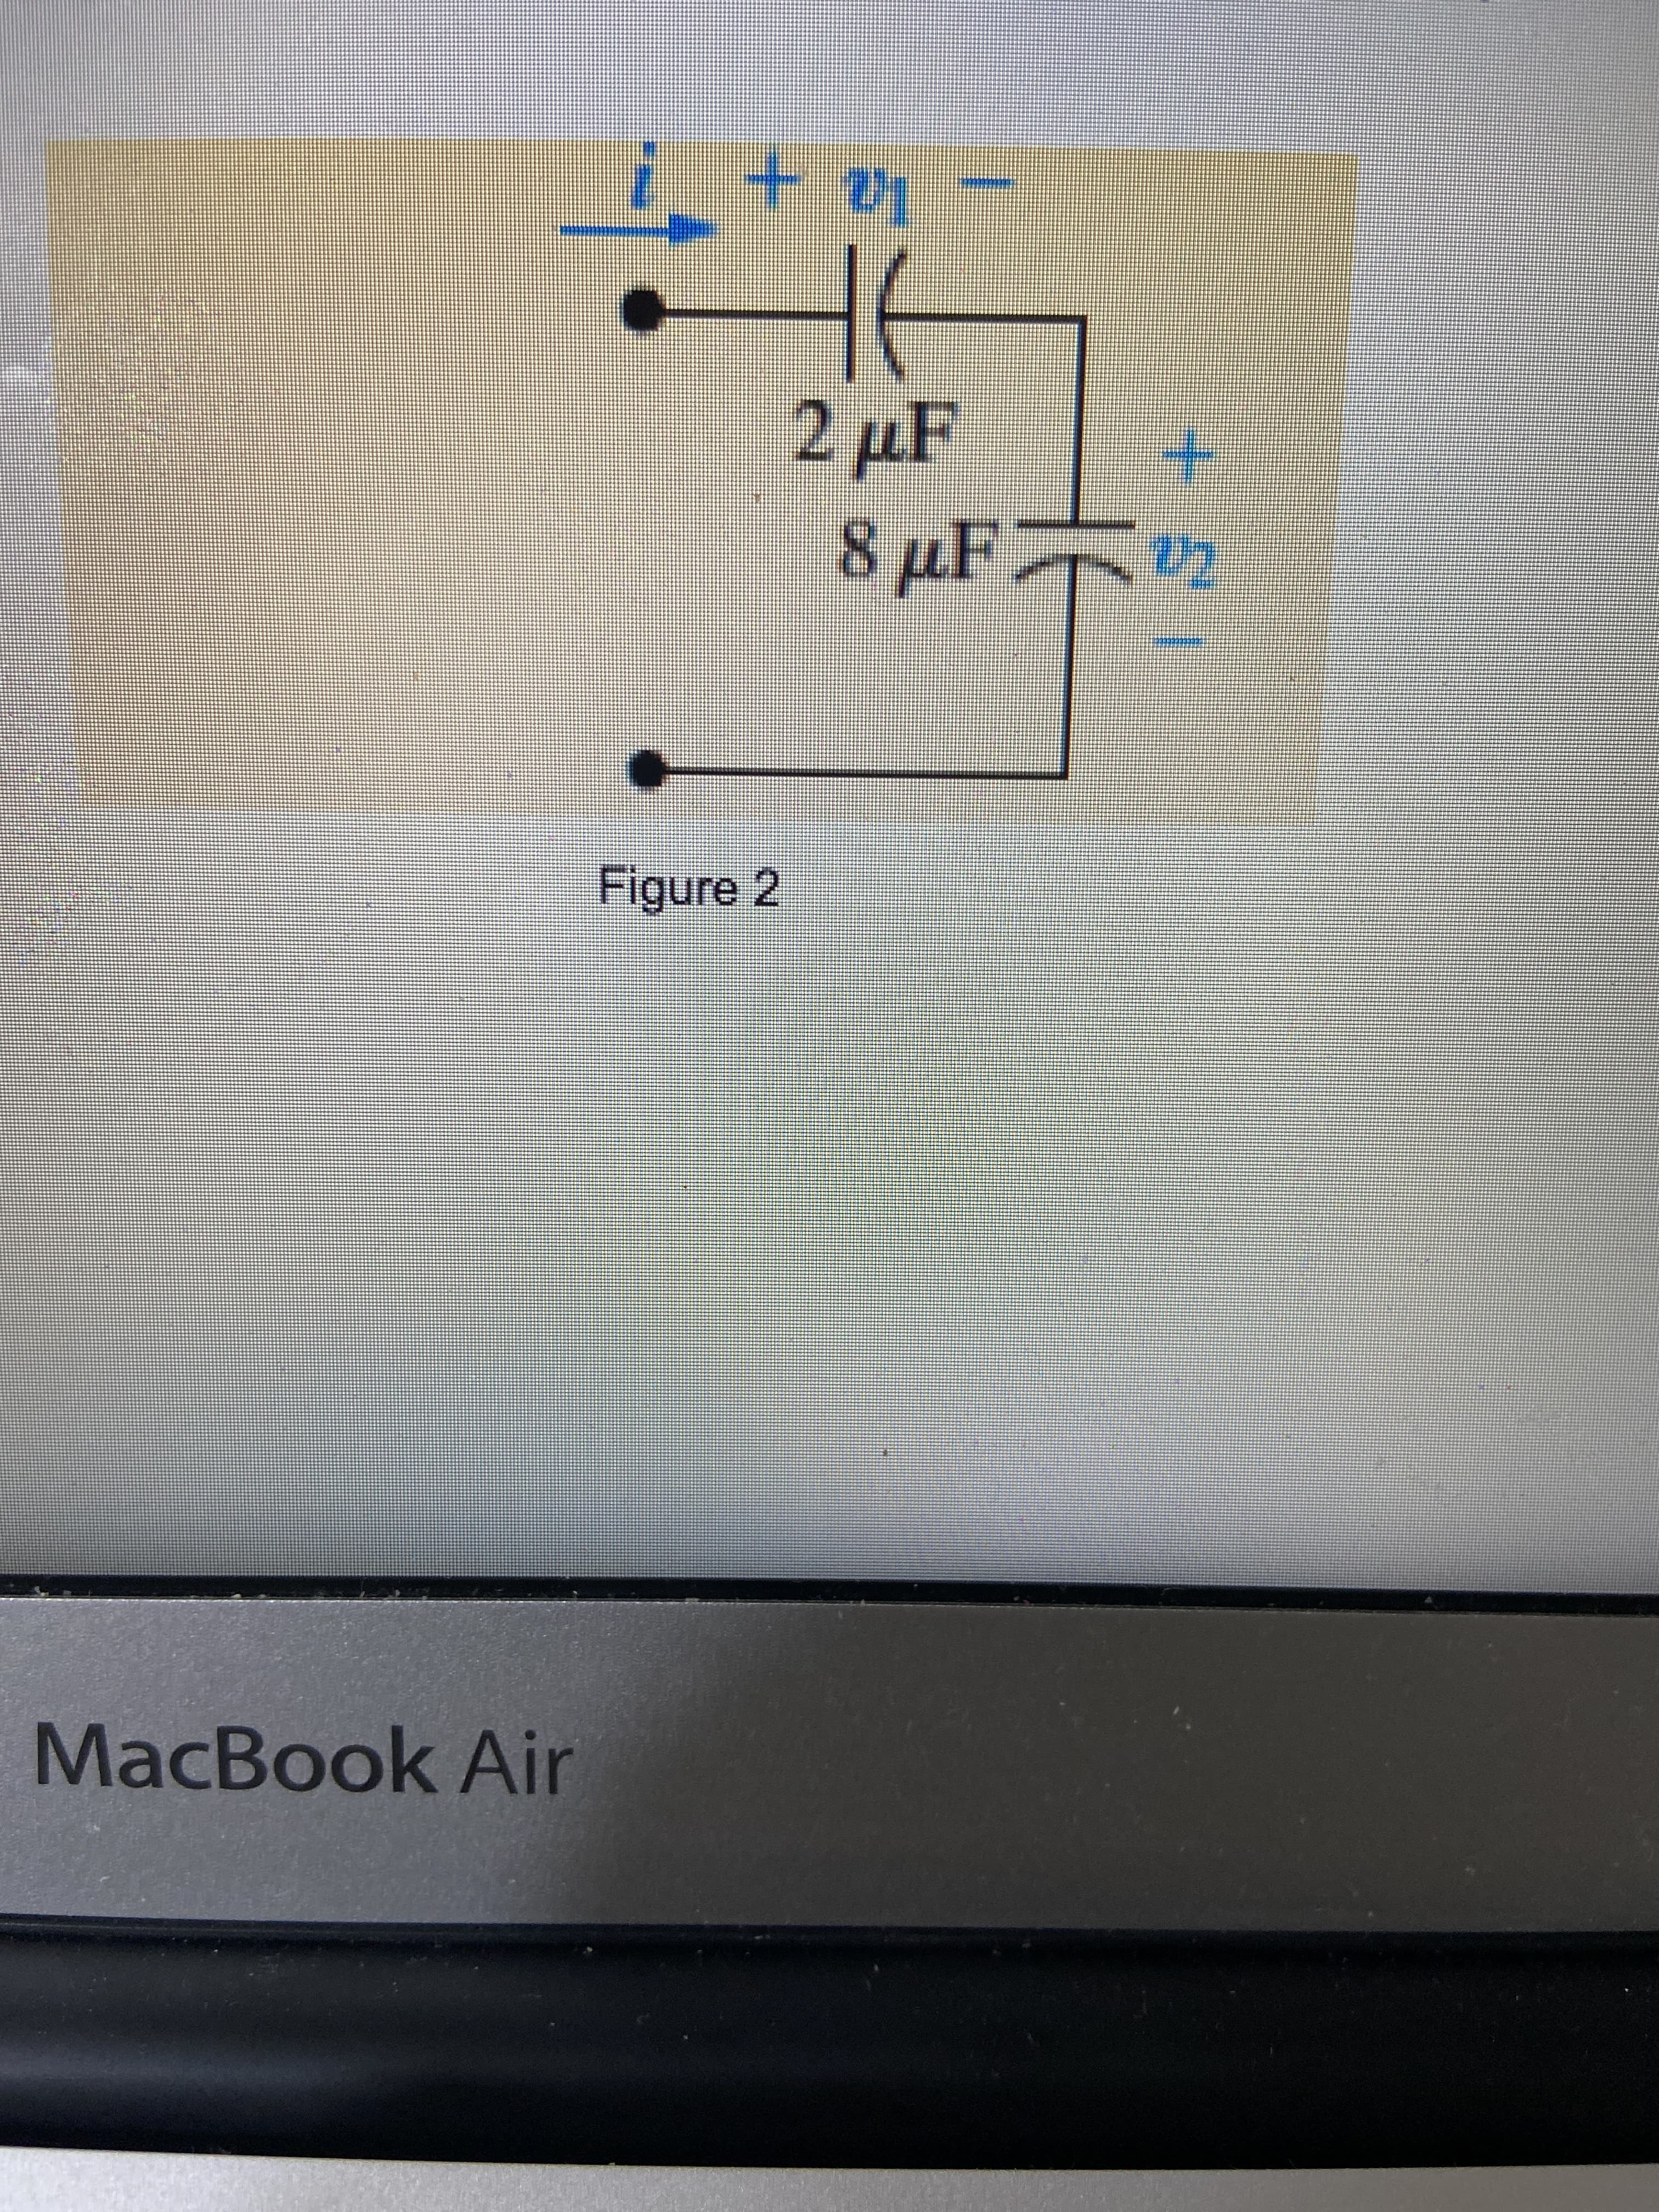 - la +!
8µF7
Figure 2
MacBook Air
